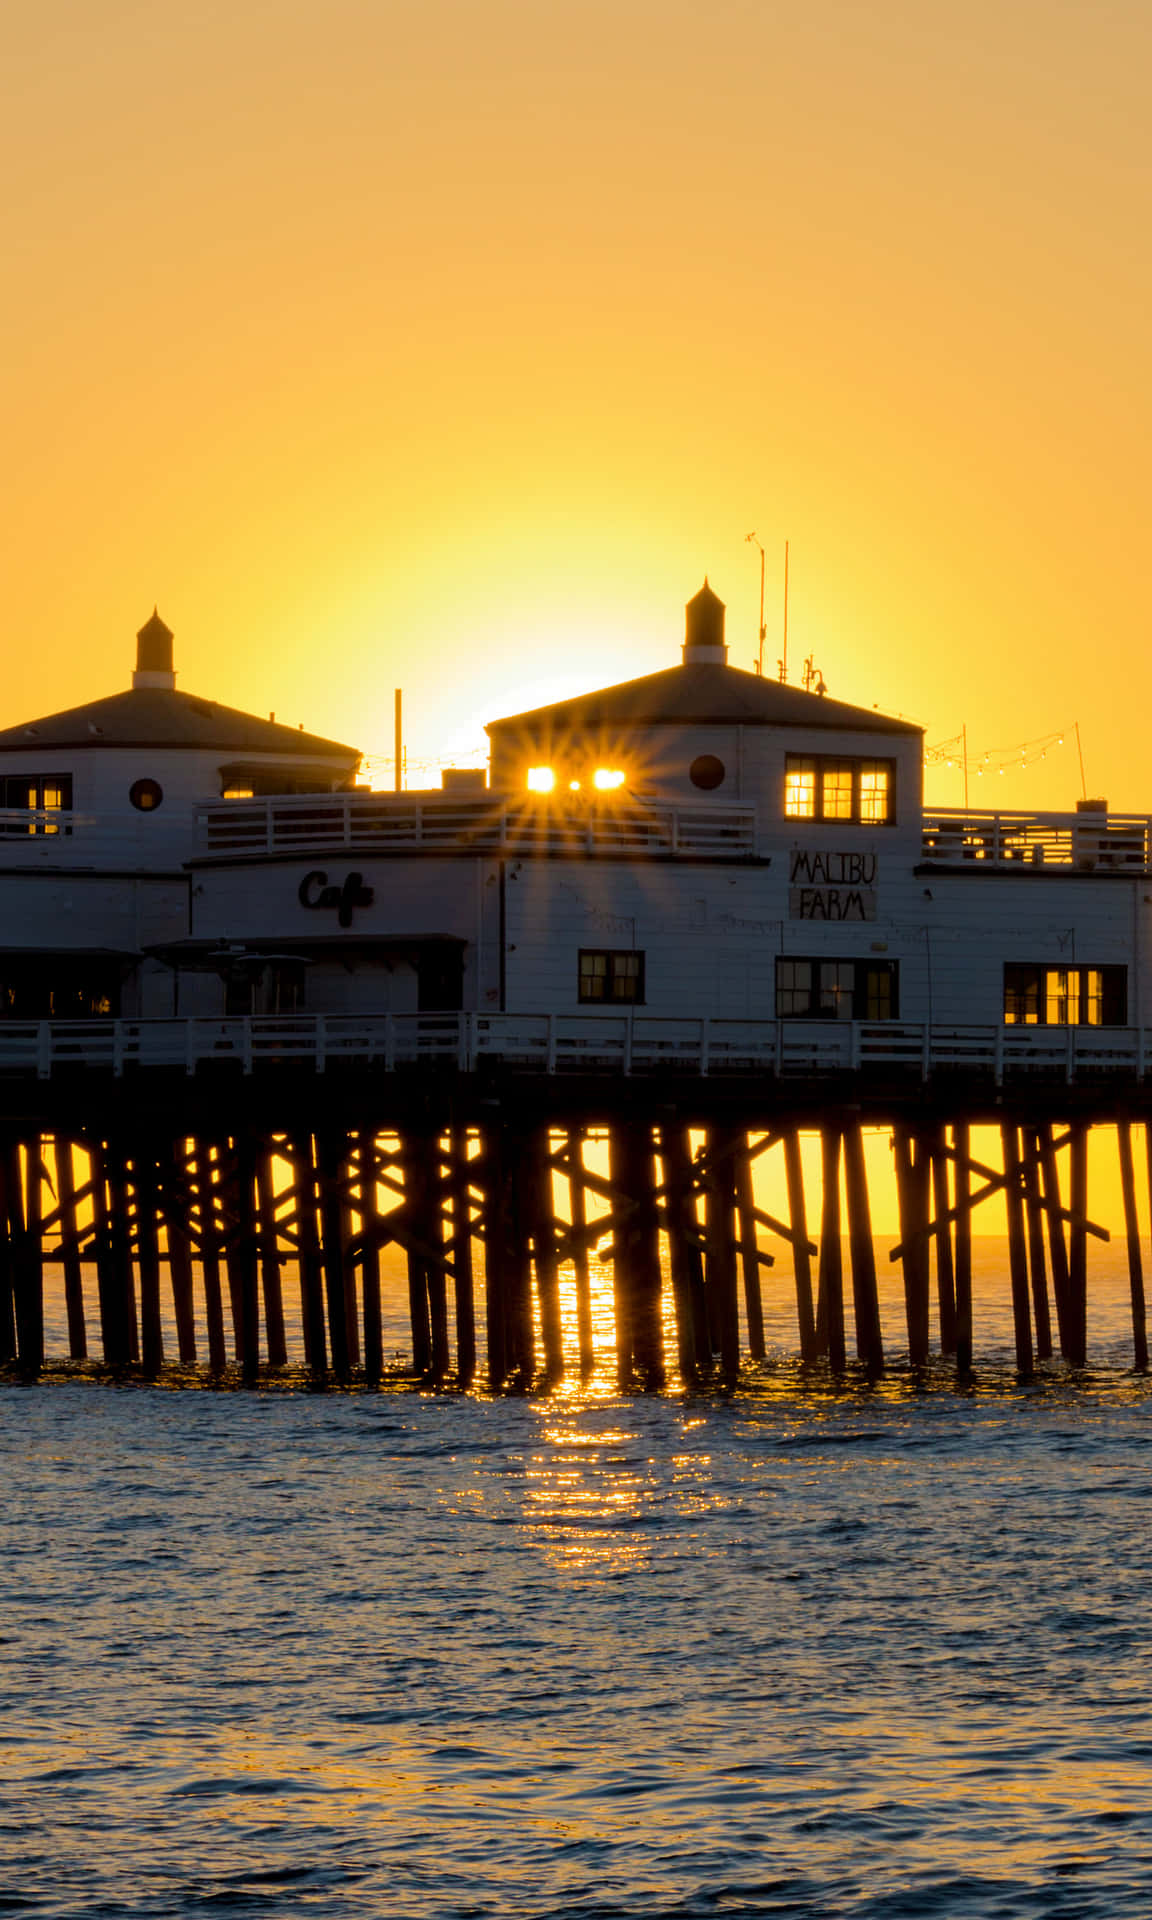 Iphone X Malibu baggrund Malibu Pier solnedgang